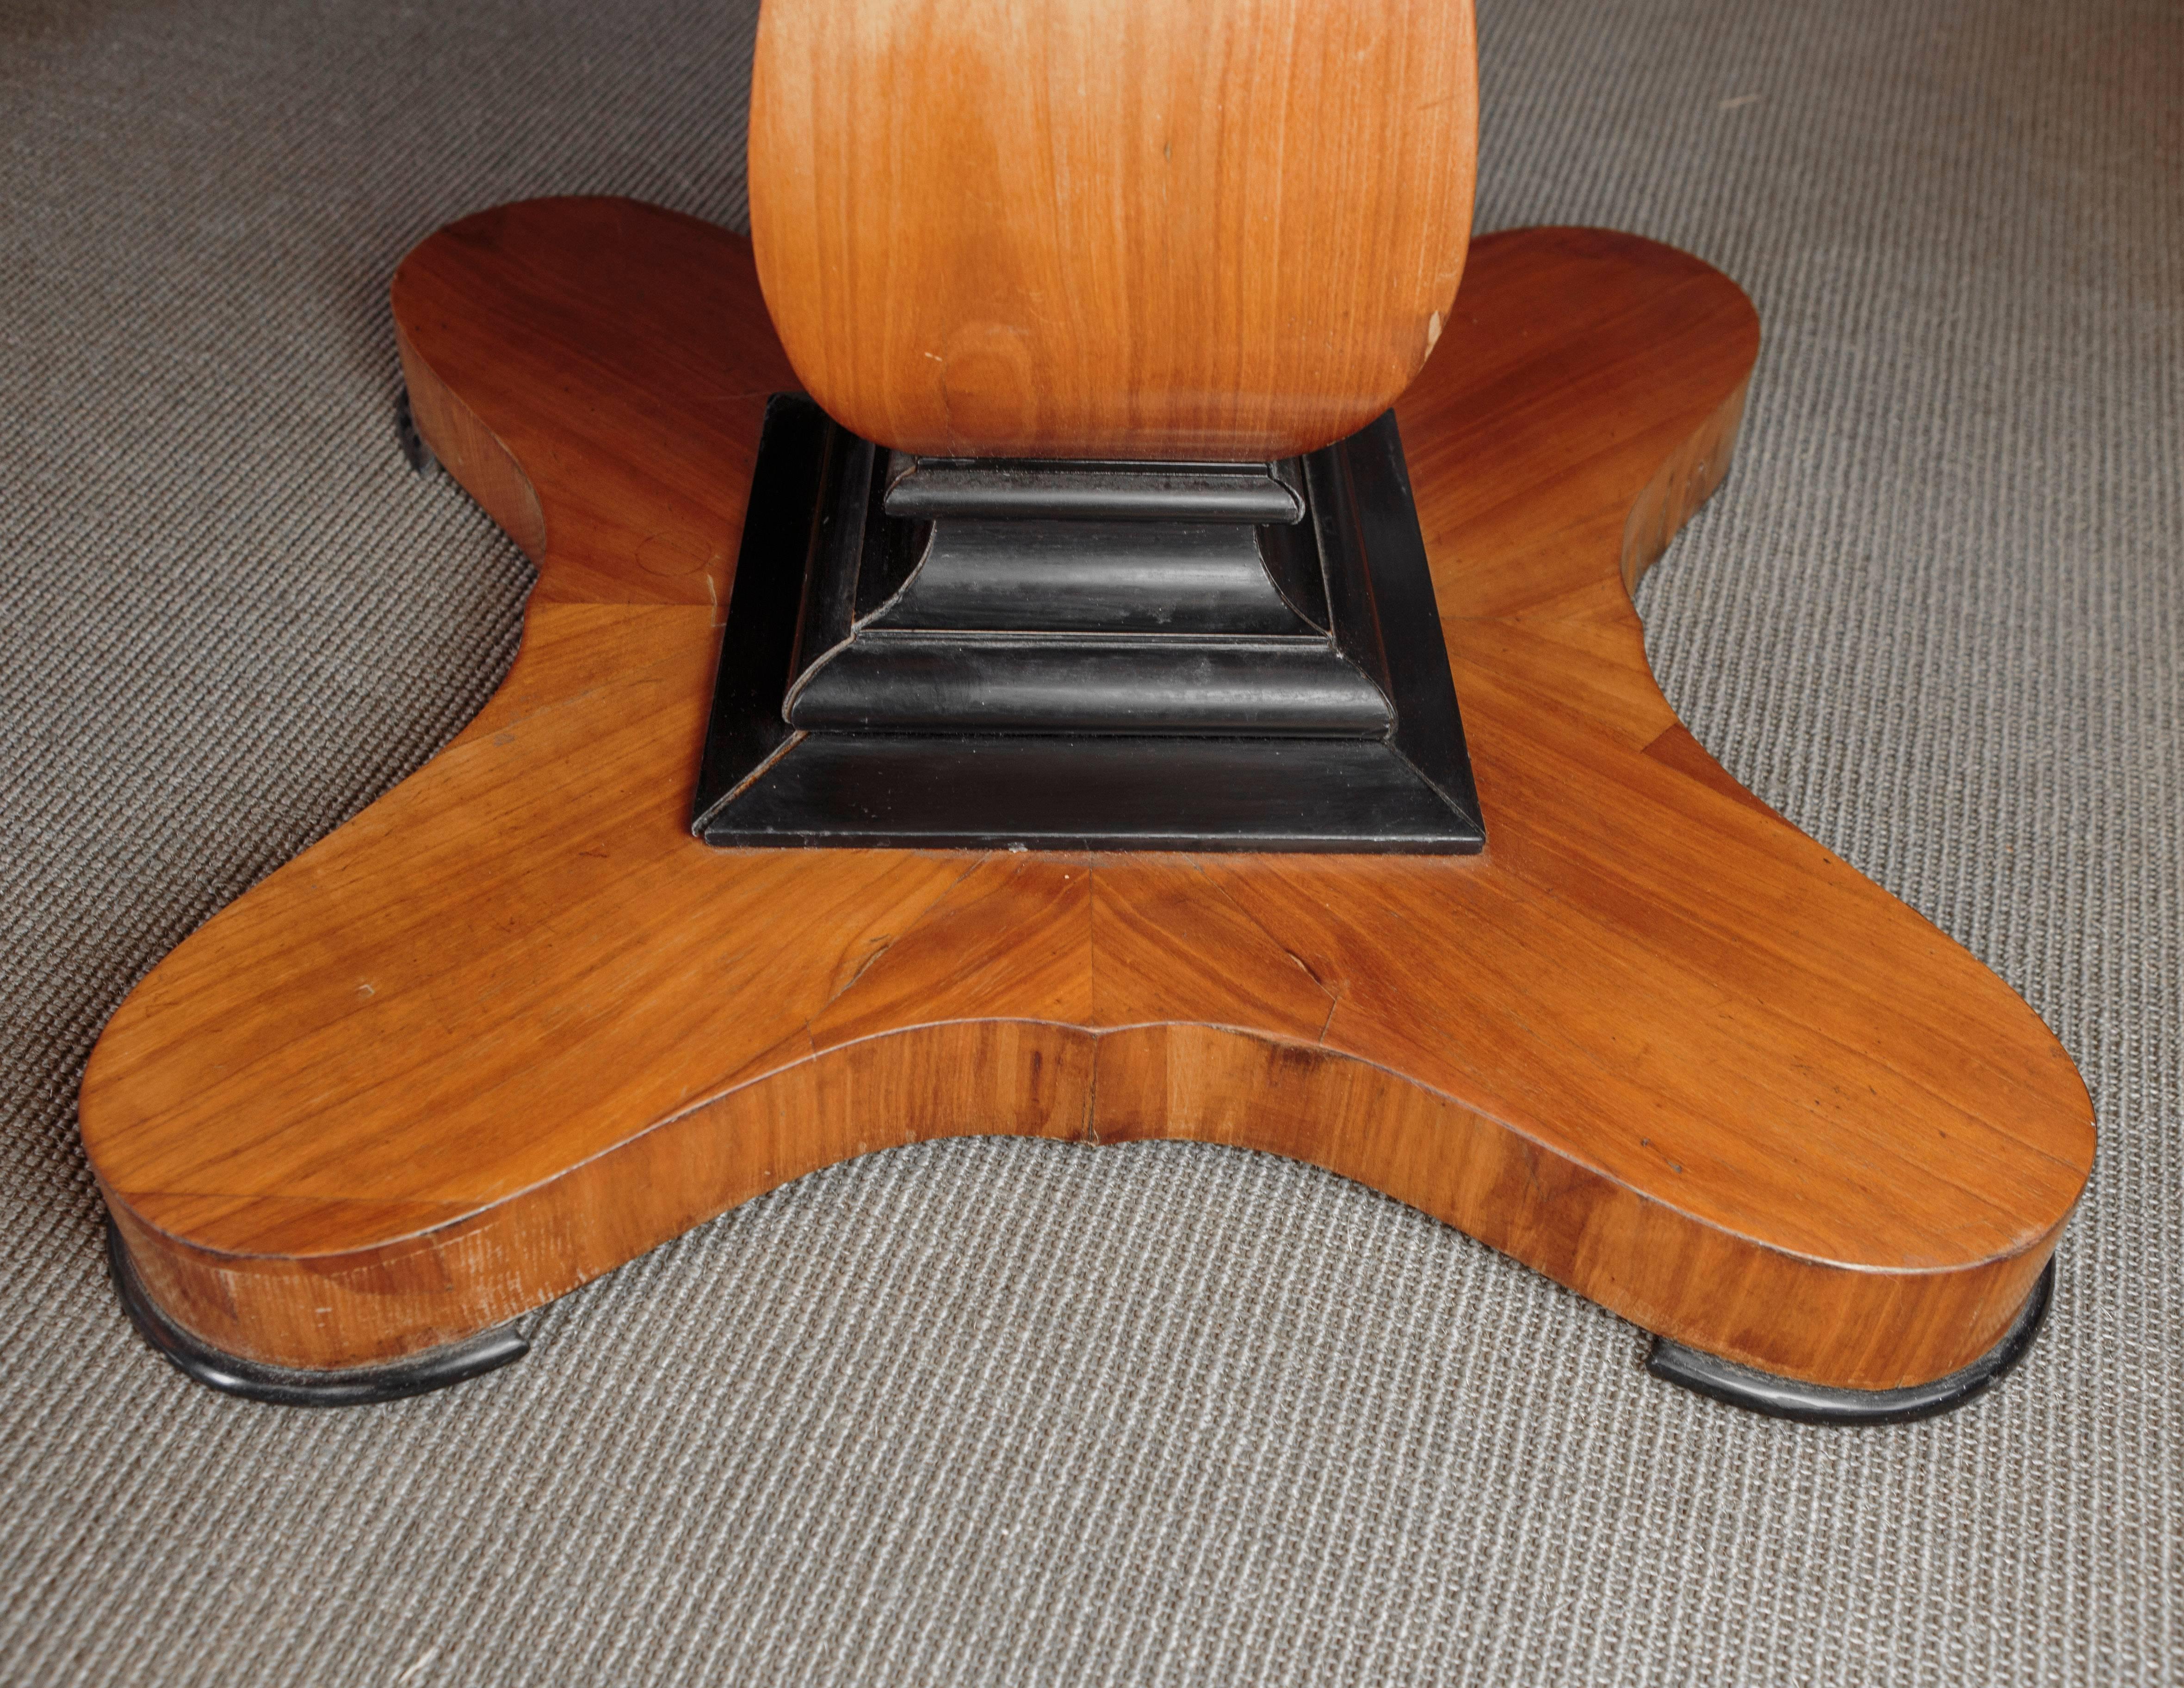 19th Century Biedermeier Pedestal Table or Center Table  In Good Condition For Sale In San Antonio, TX